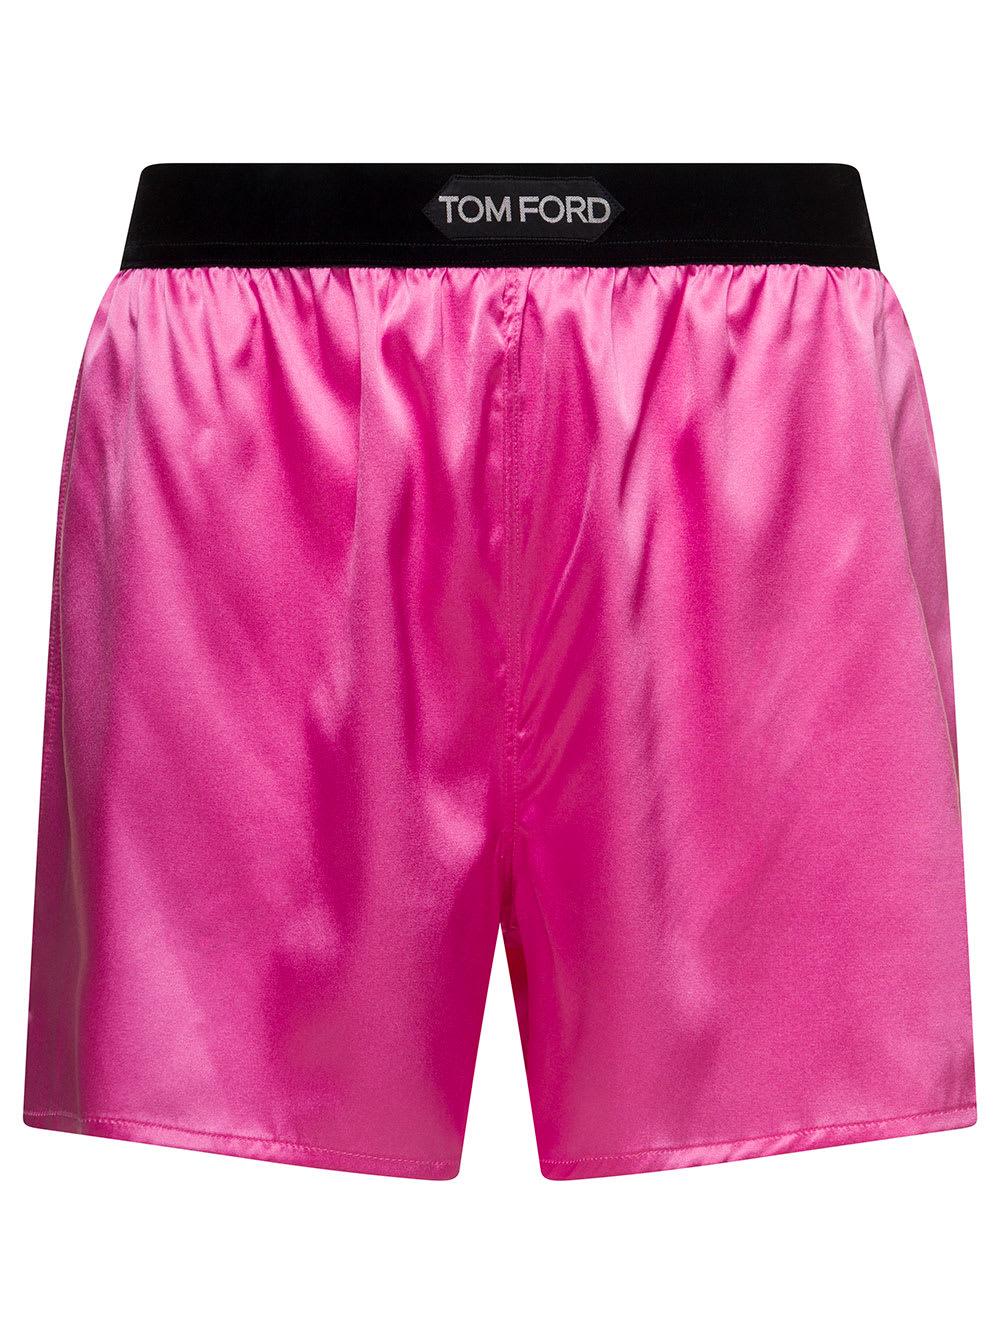 Tom Ford Stretch Silk Satin Shorts